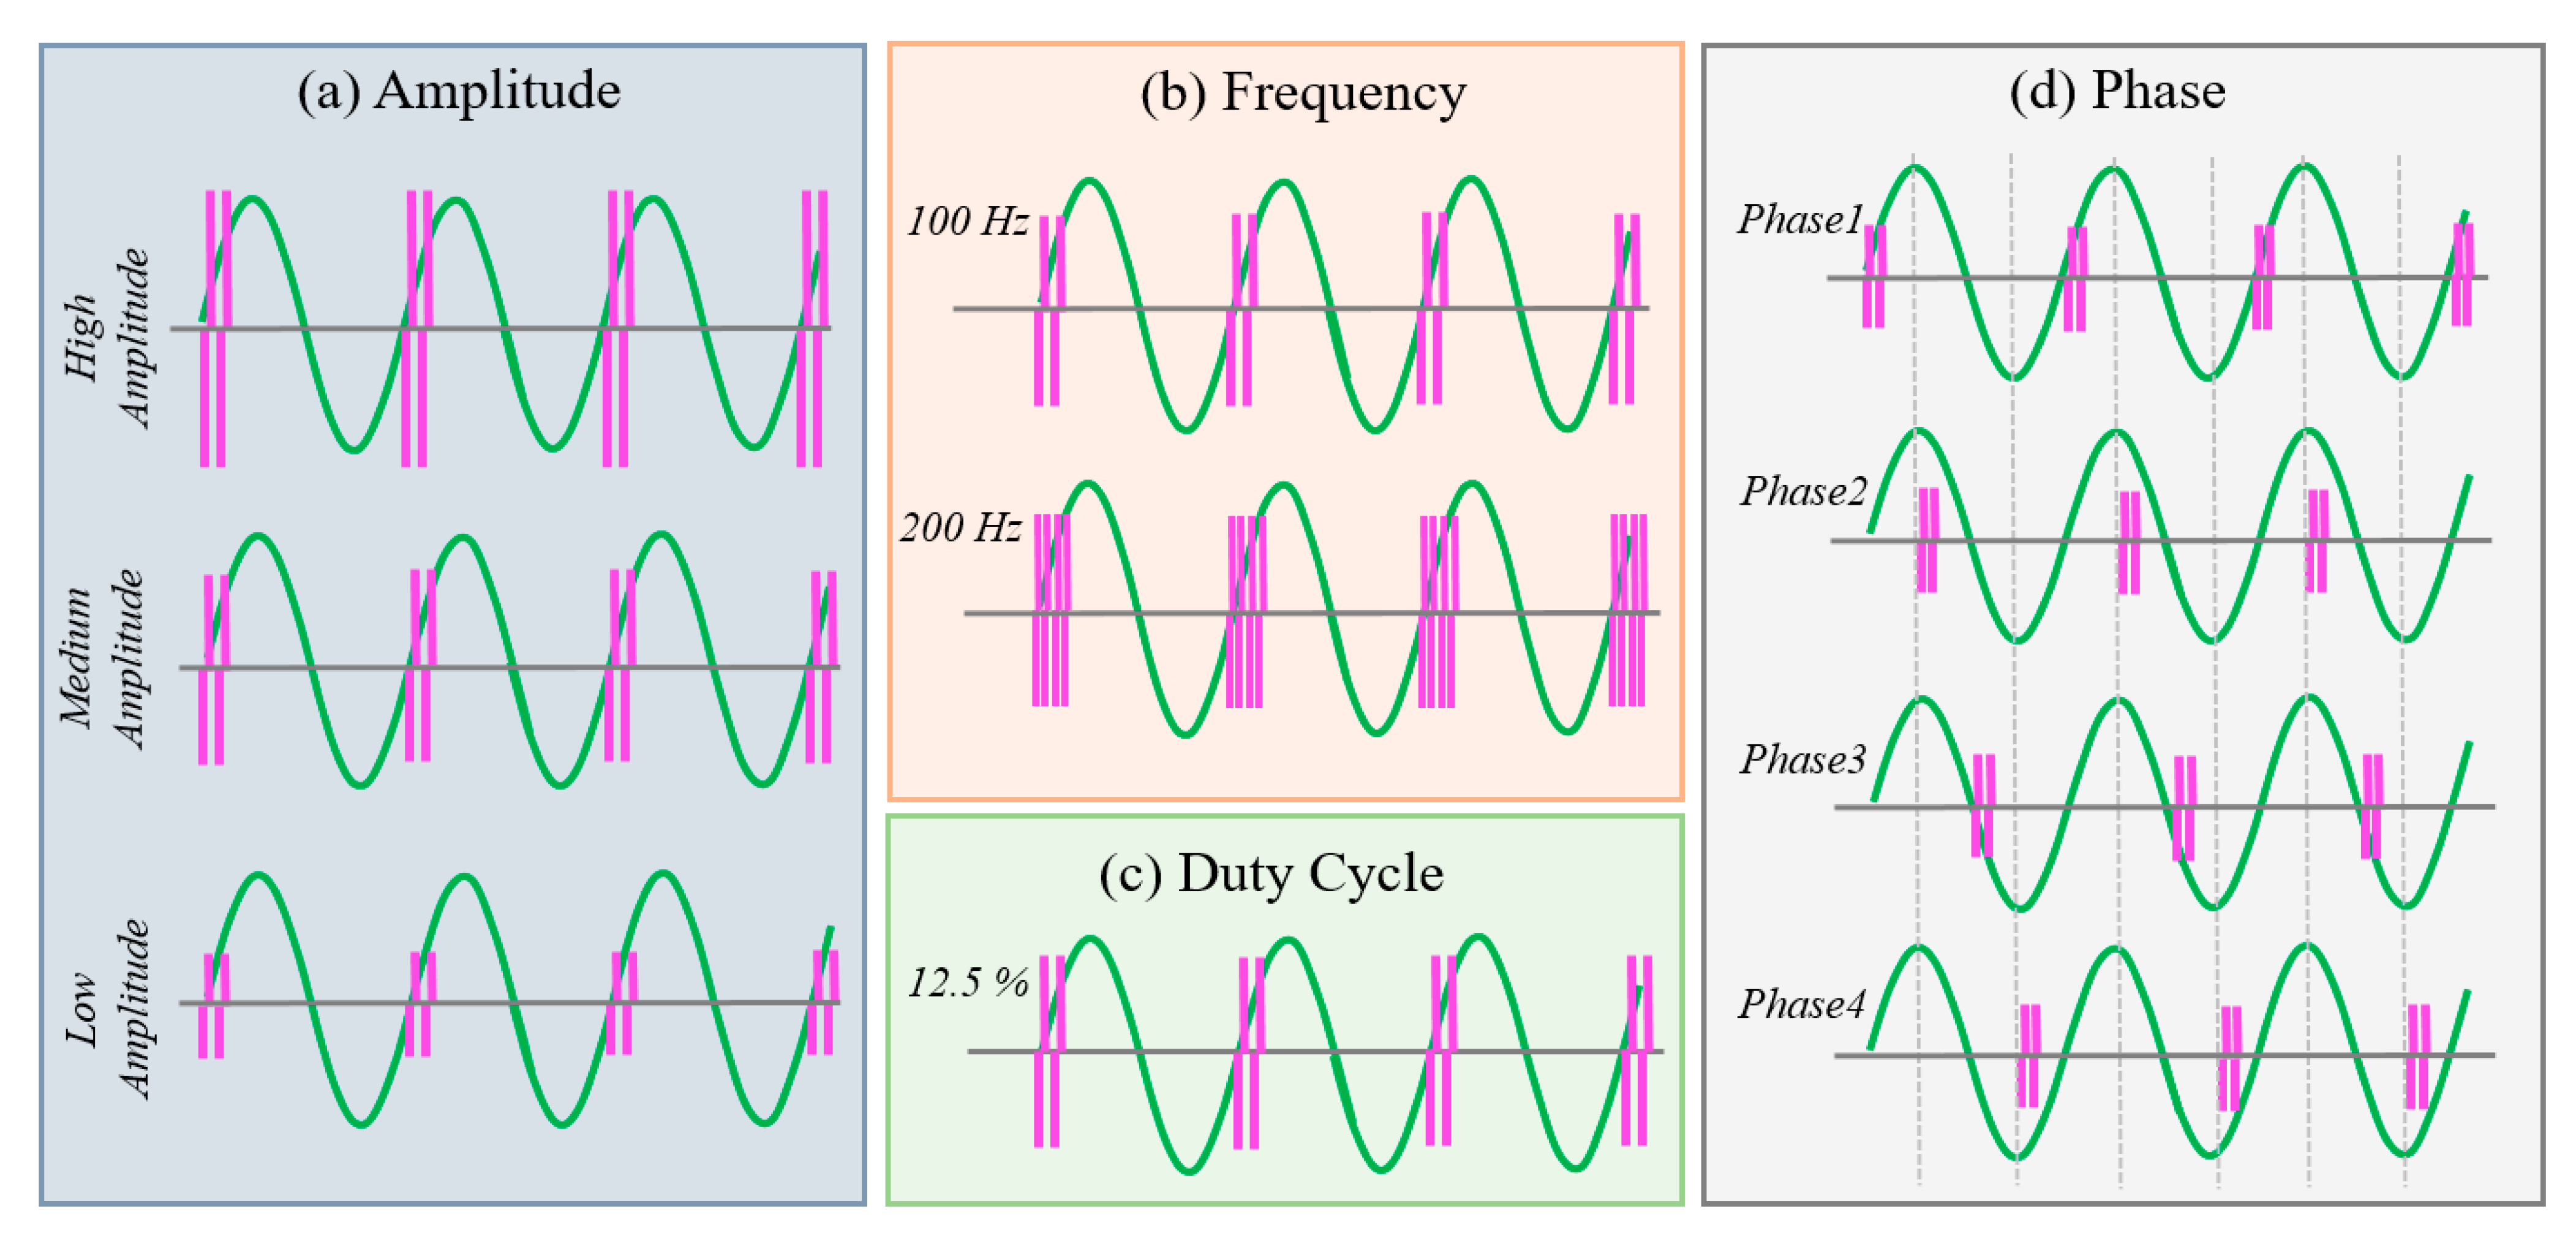 C frequency. Amplitude and Frequency Modulation. Sinus amplitude Frequency. Частотная модуляция индукционного плиты. Amplifier amplitude characteristic.